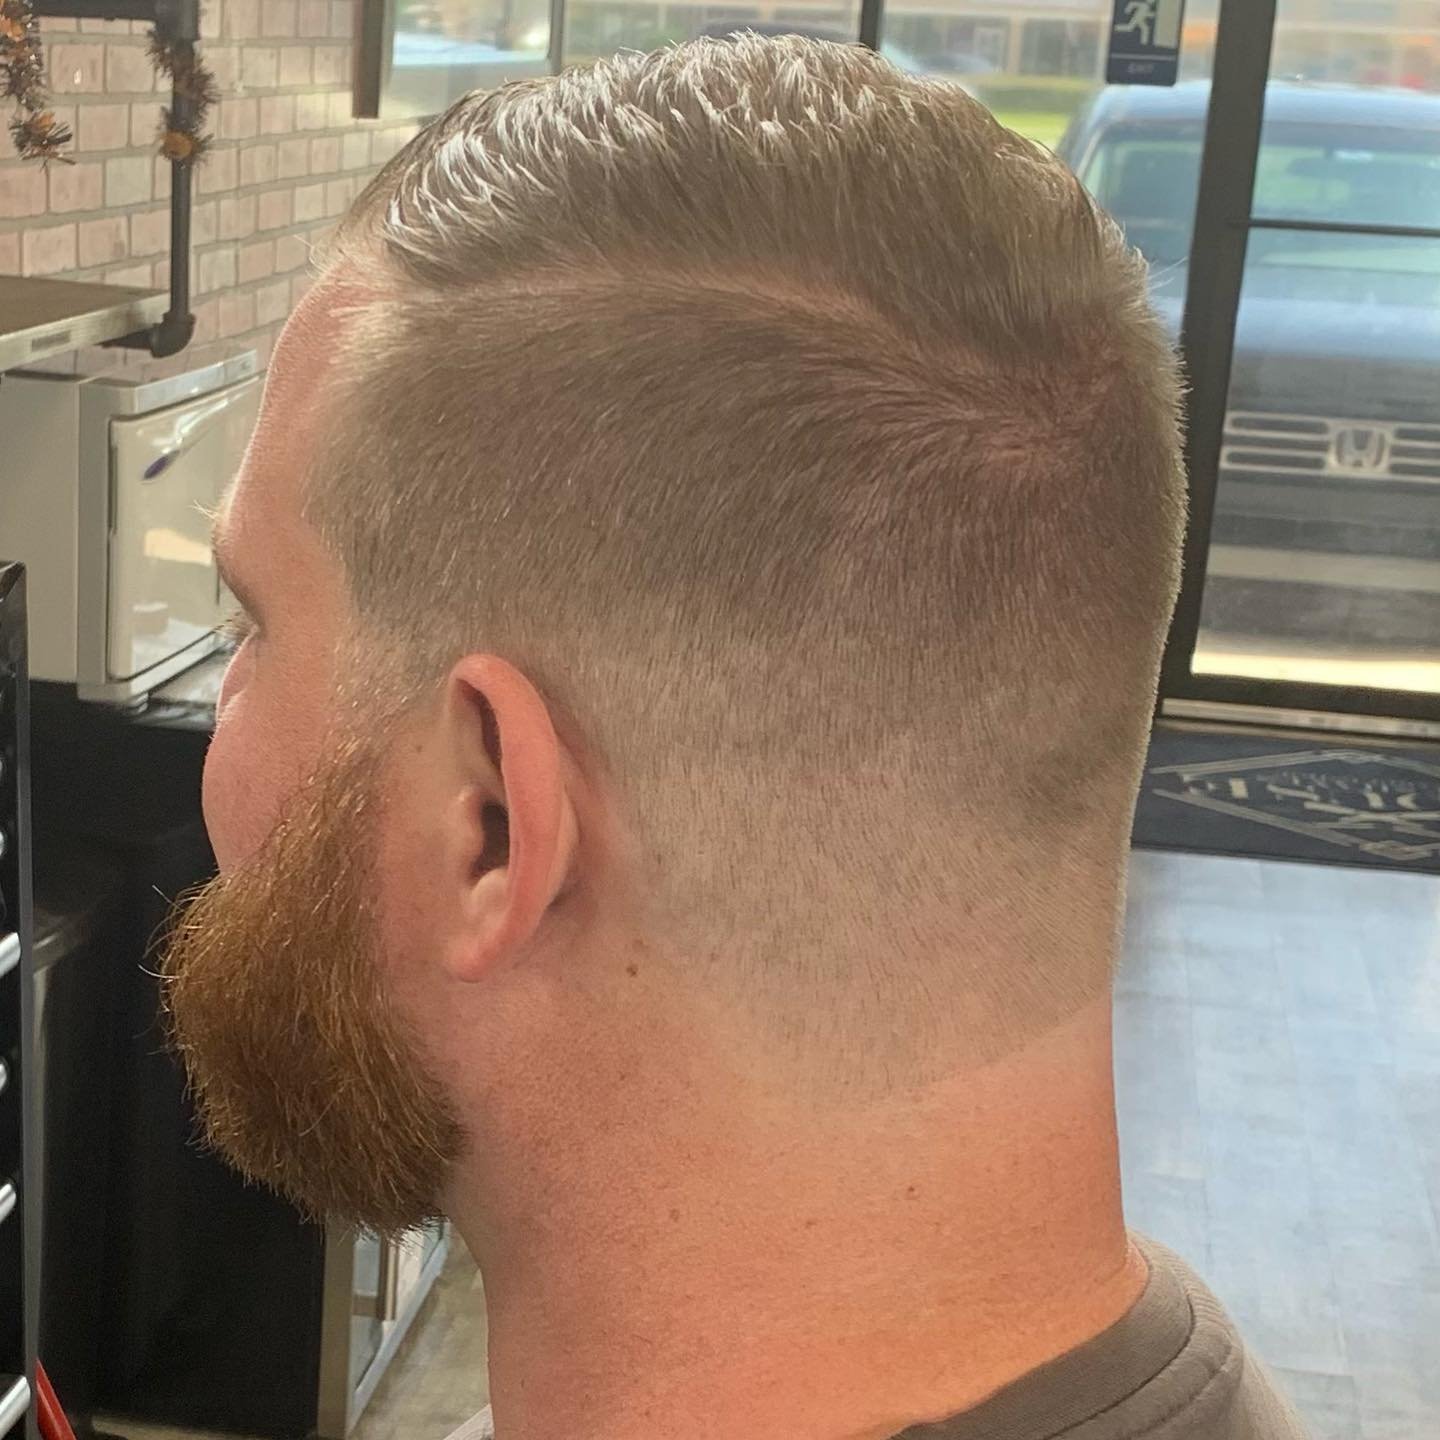 Jacksonville beard trim